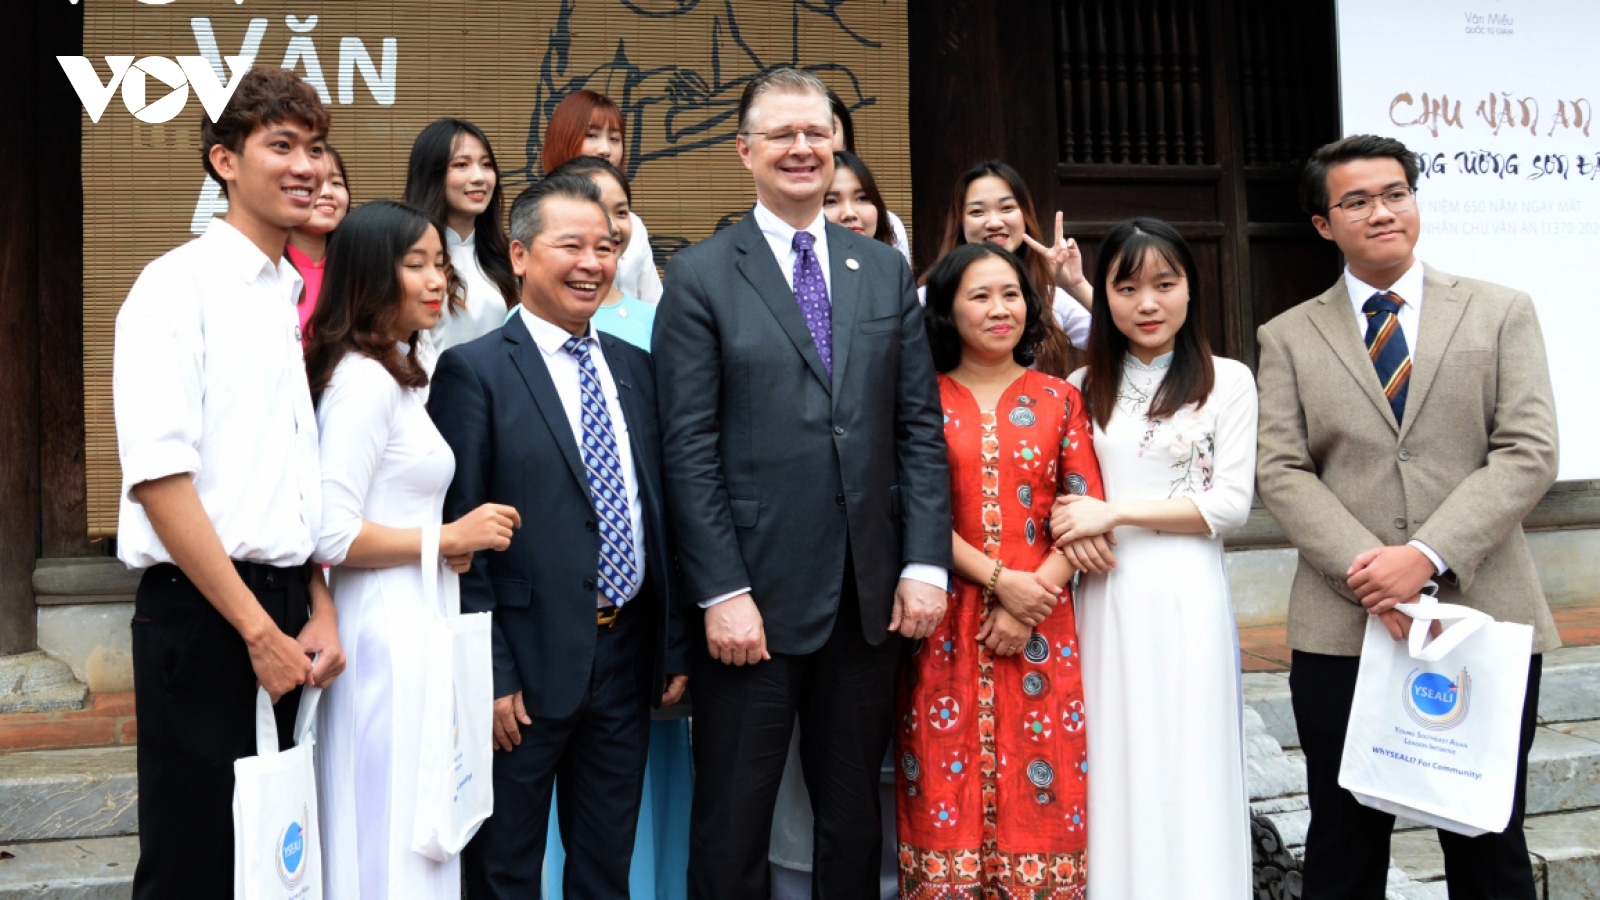 US ambassador pays visit to Hanoi’s Temple of Literature